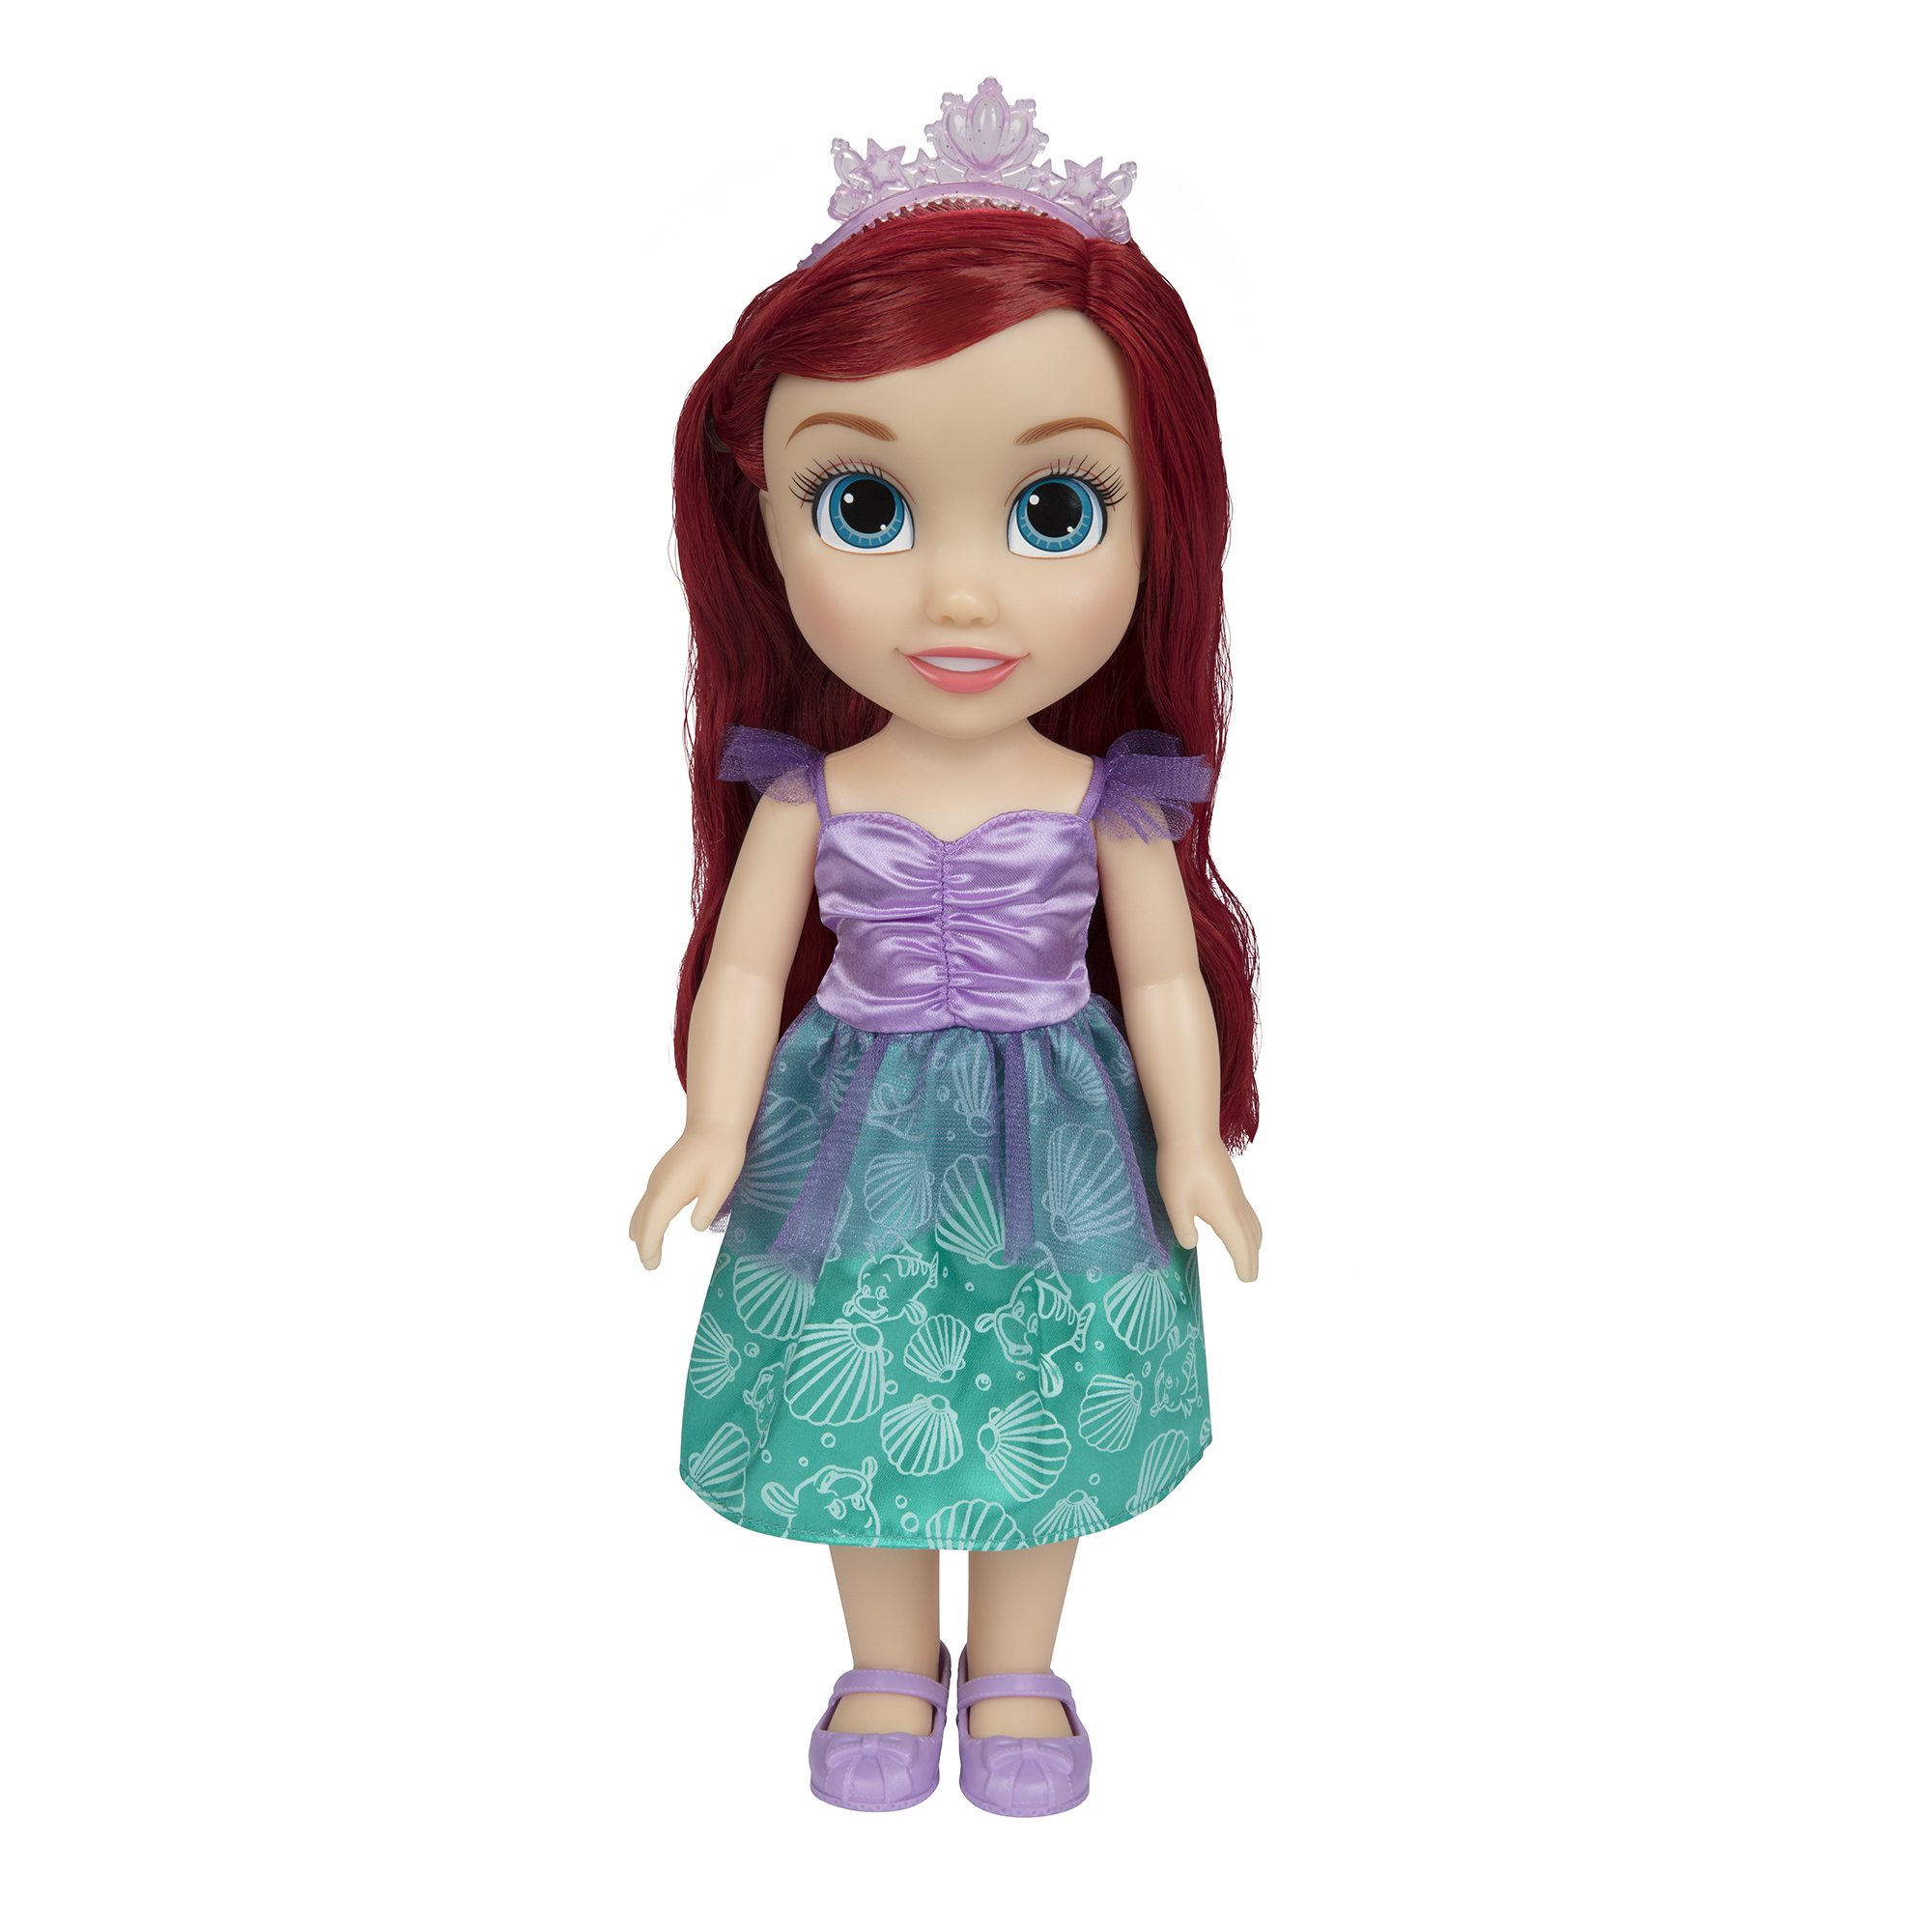 Disney Princess My Friend Ariel Doll with Child Size Dress Gift Set - image 2 of 8